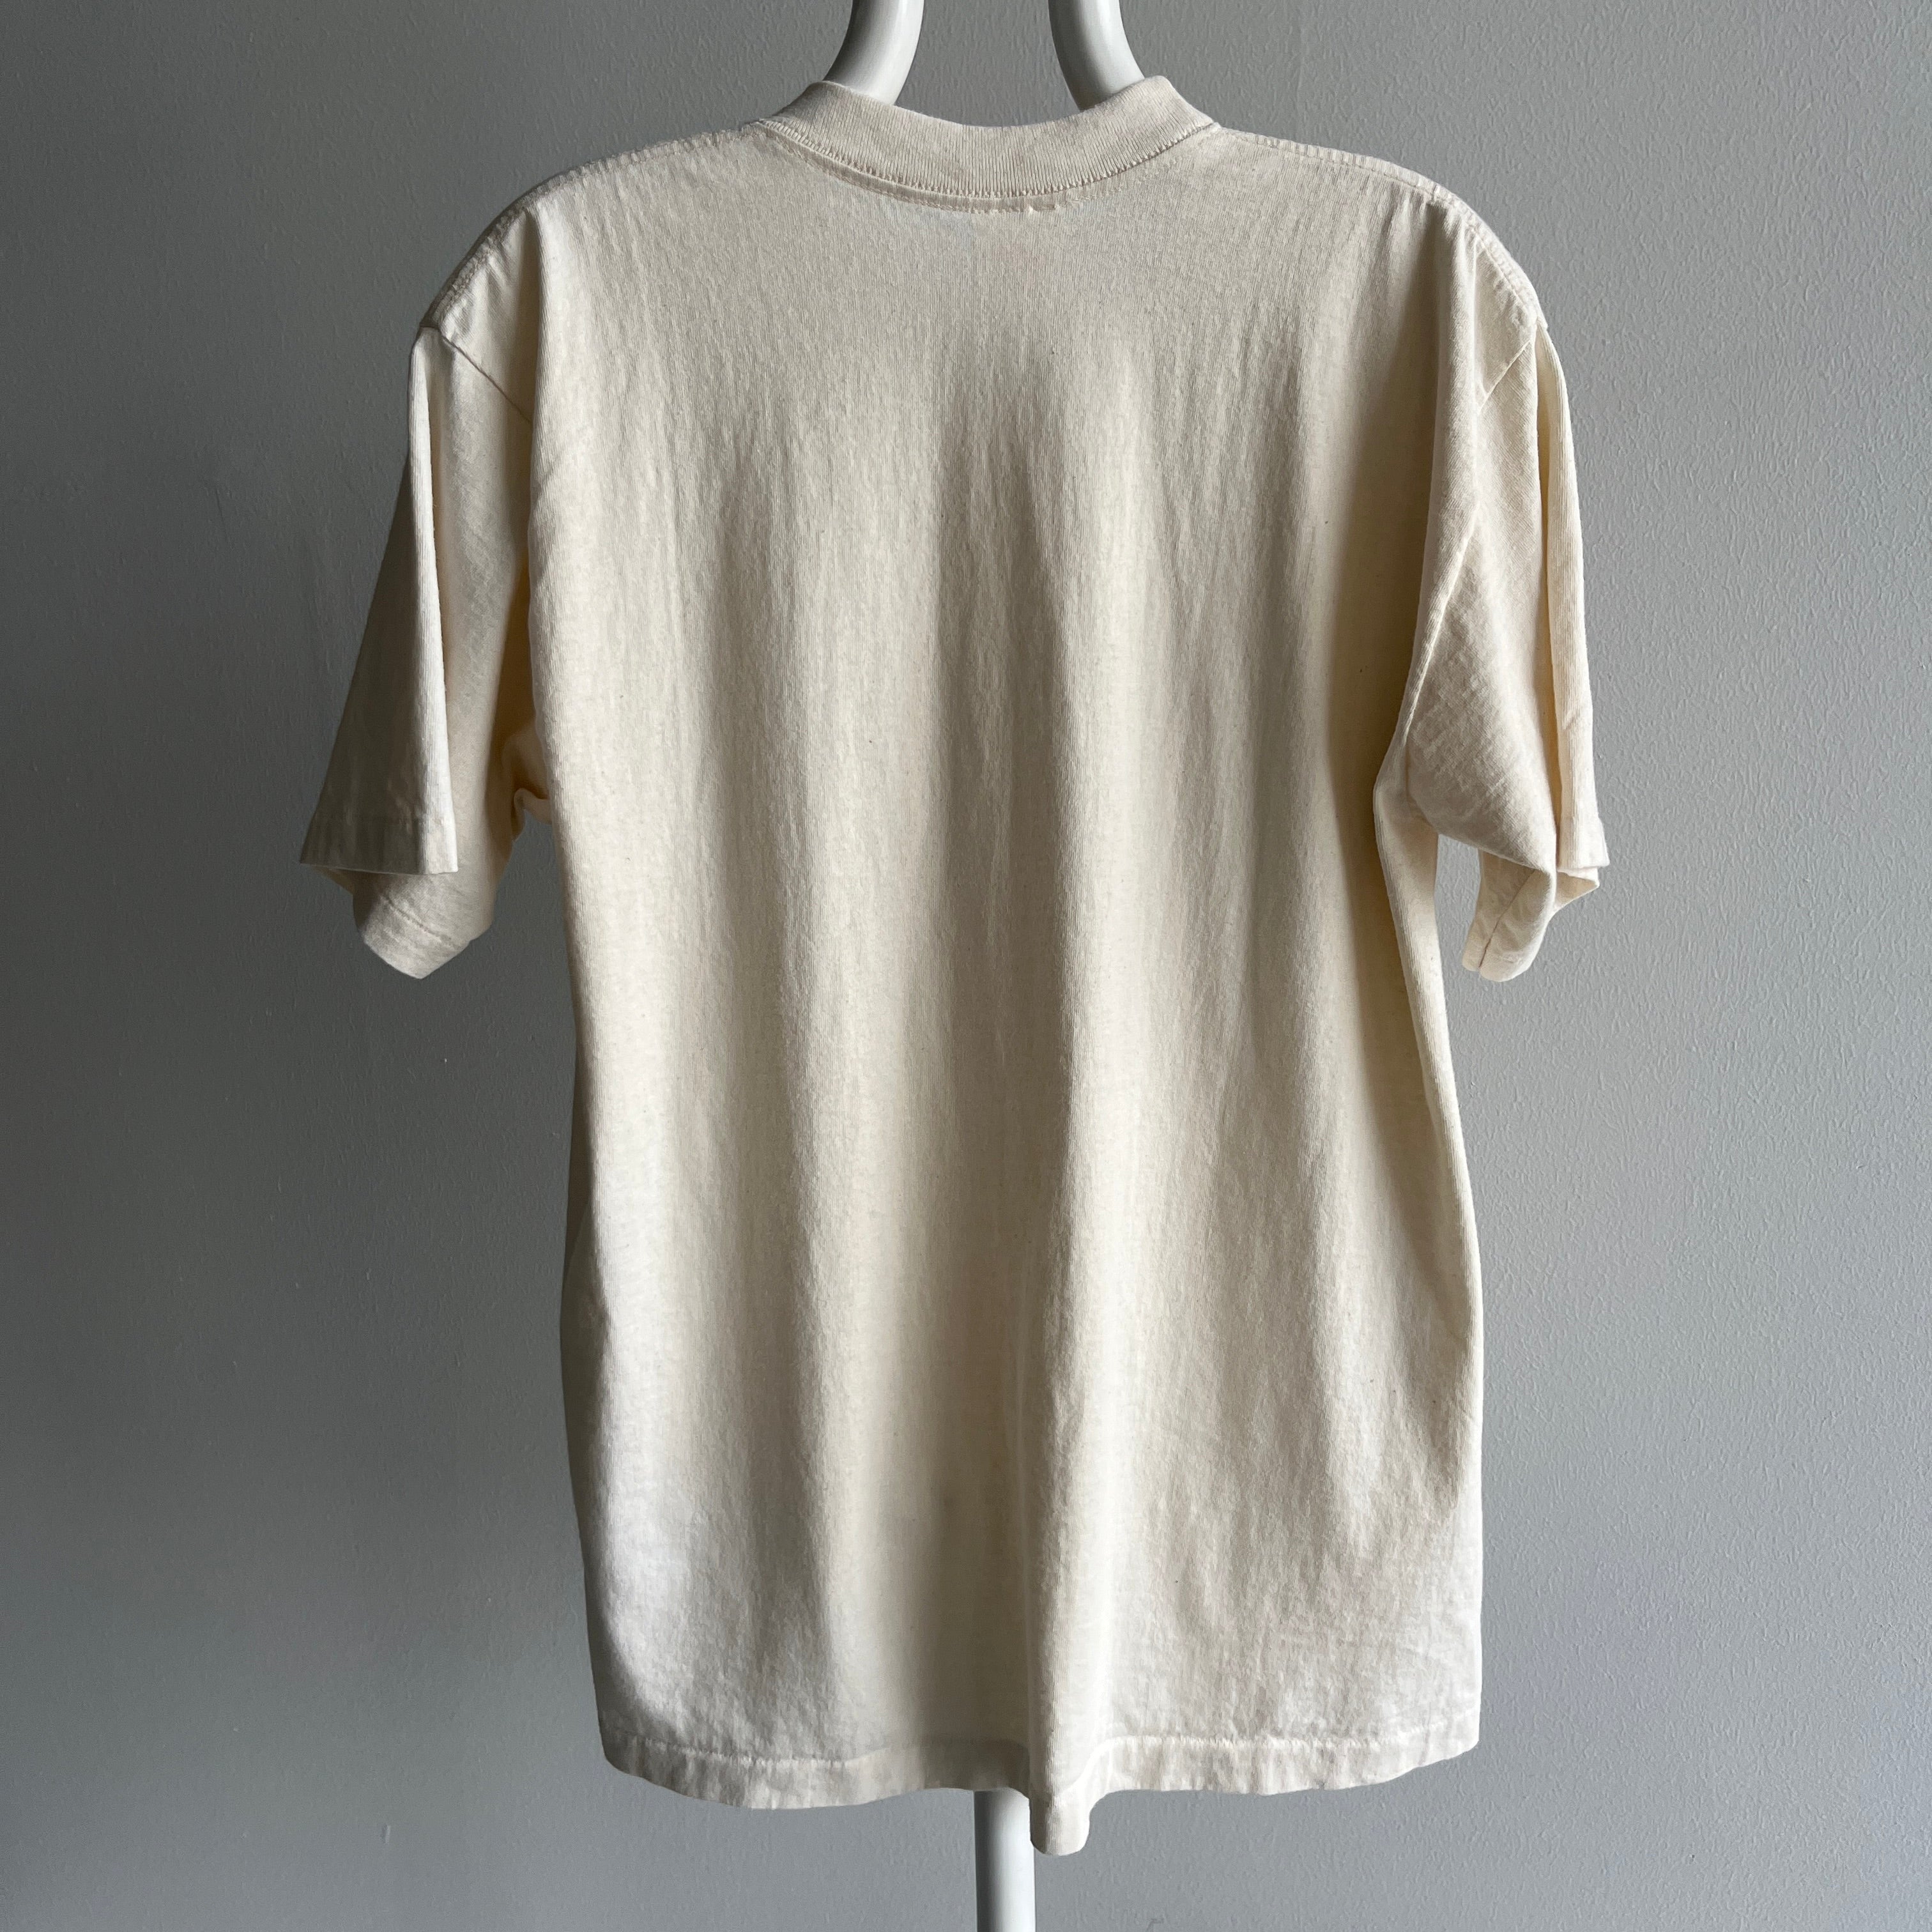 1980s Sweet Little Bird Cotton Off White T-Shirt - Awwwwww